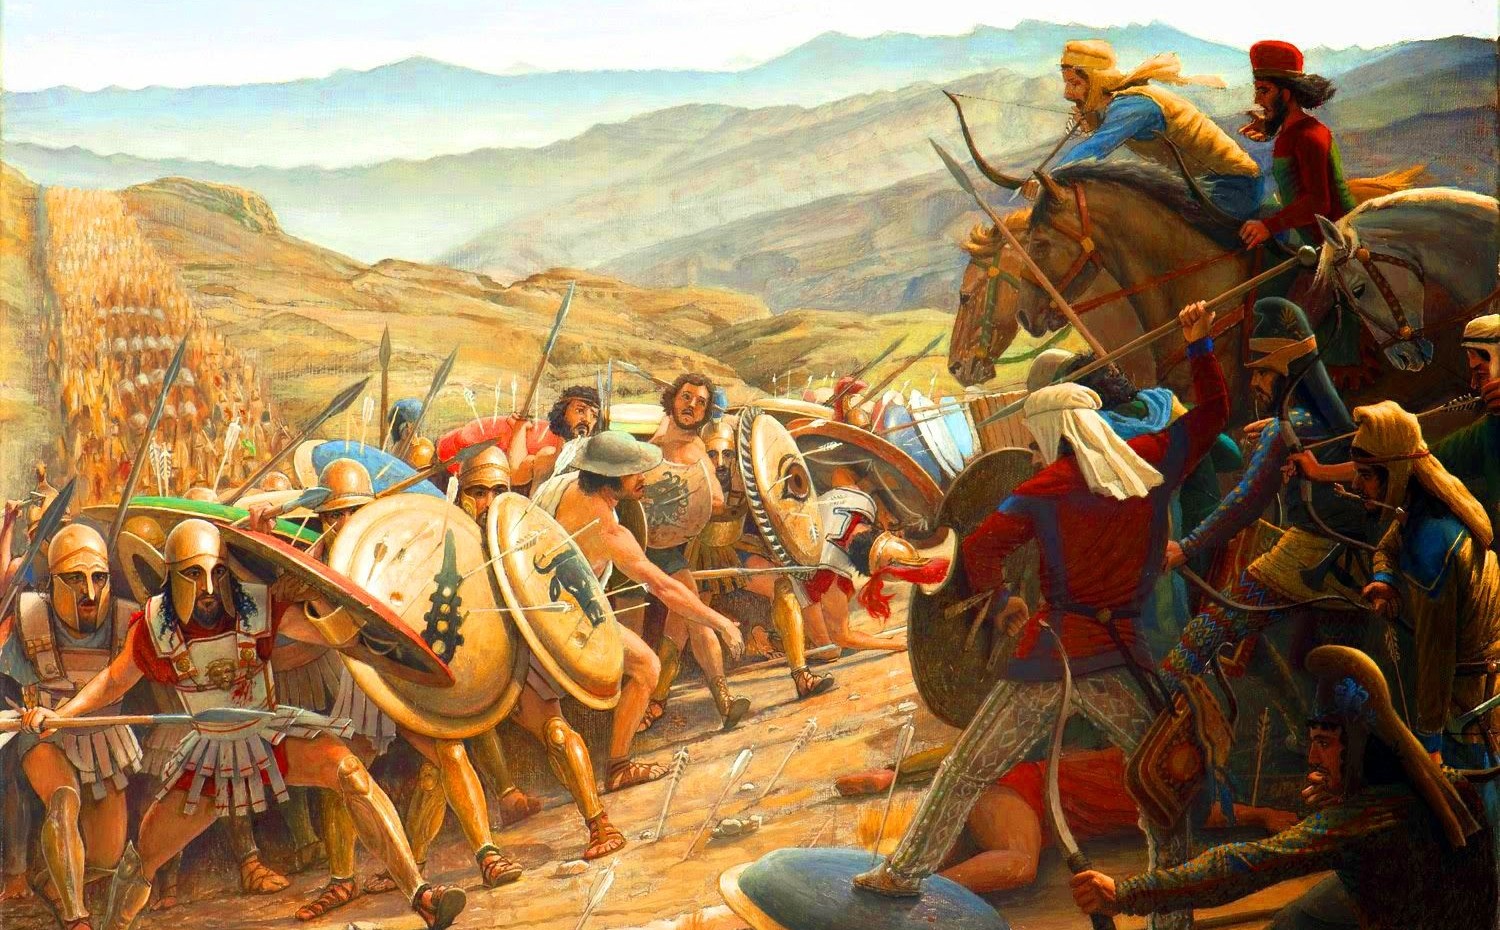 Greco-Persian Wars